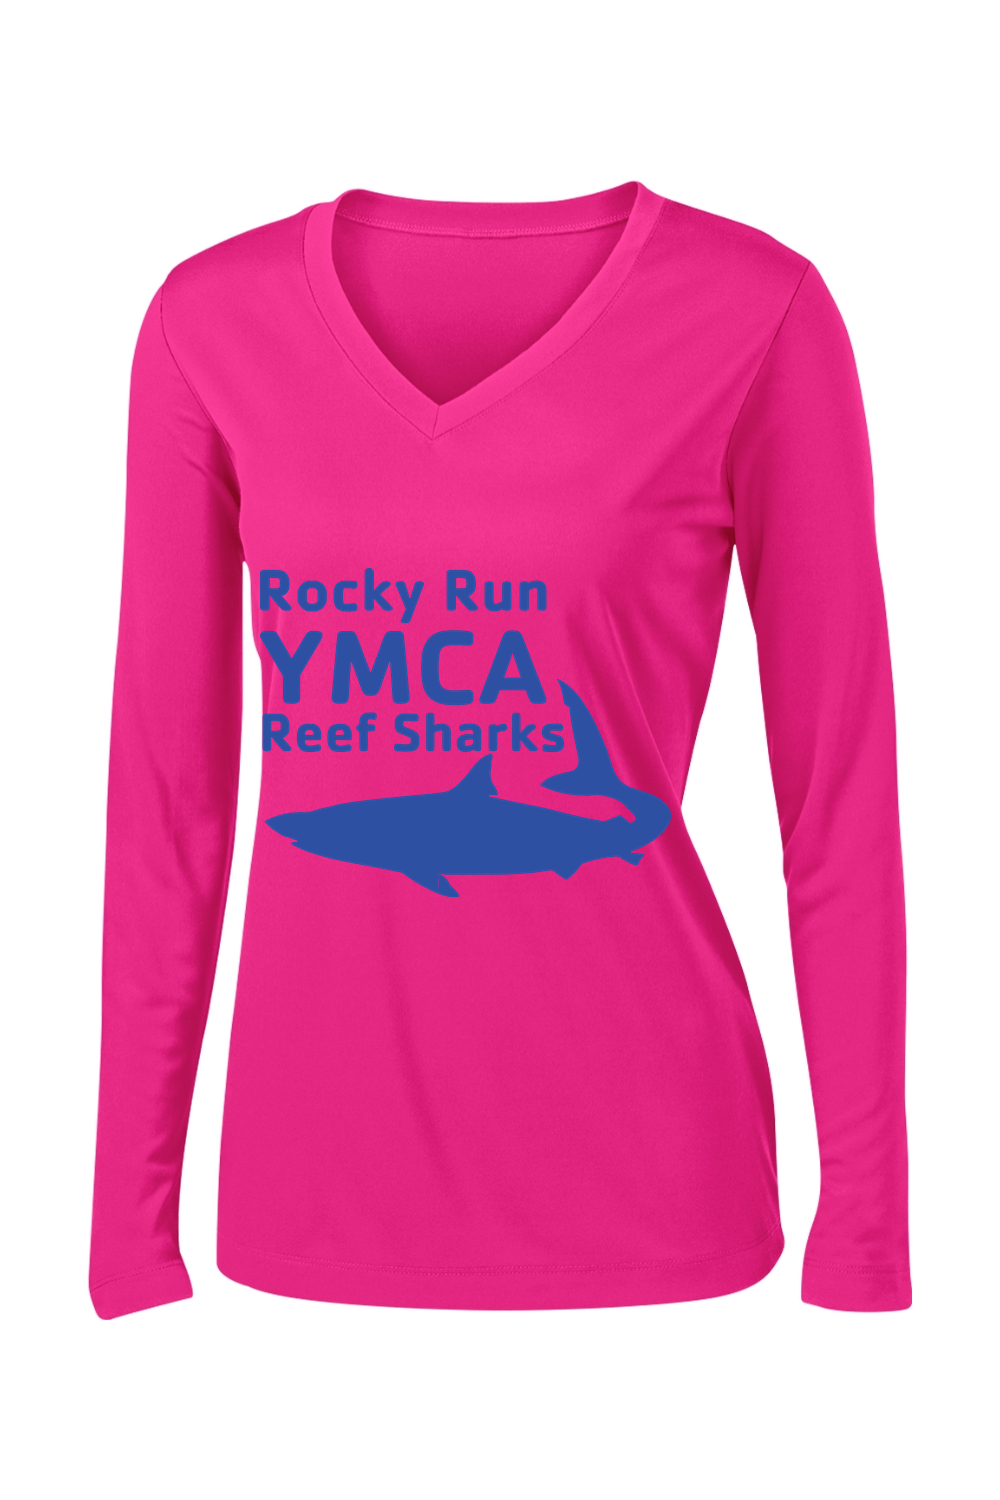 ROCKY RUN Sport-Tek Ladies PosiCharge Competitor Long Sleeve V-Neck Tee